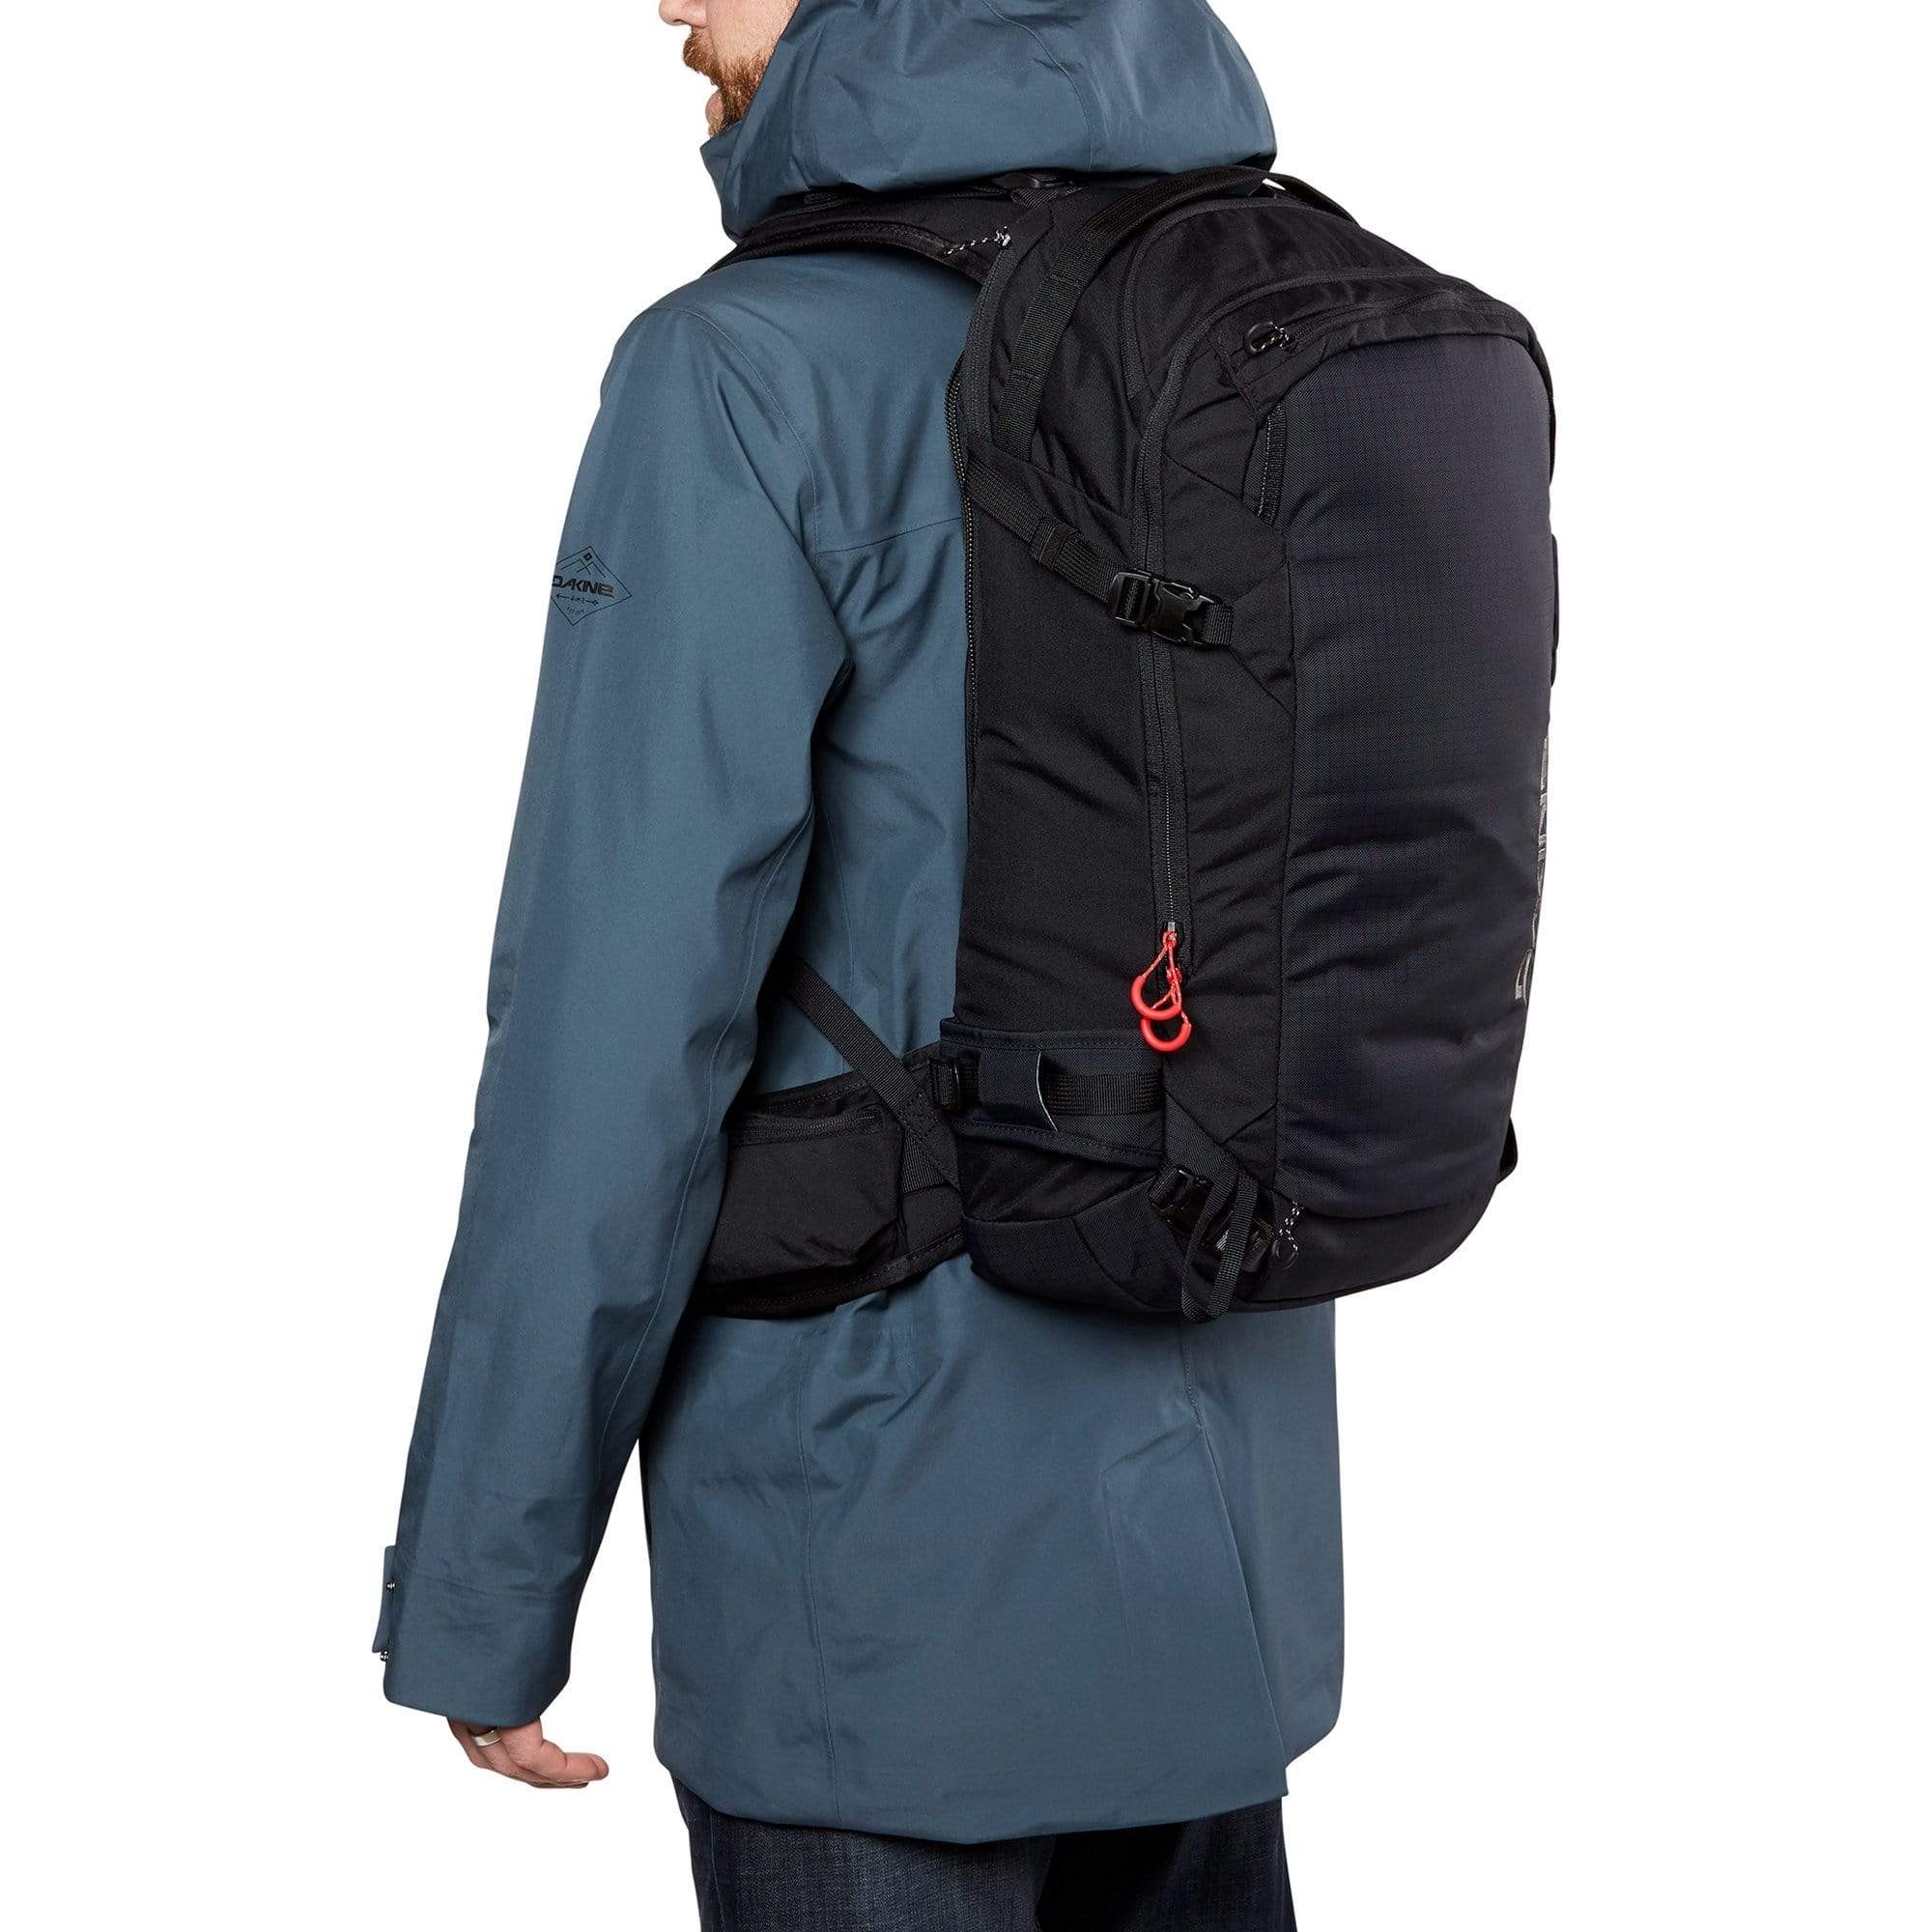 Dakine Poacher 32 Snowboard/Ski Backpack